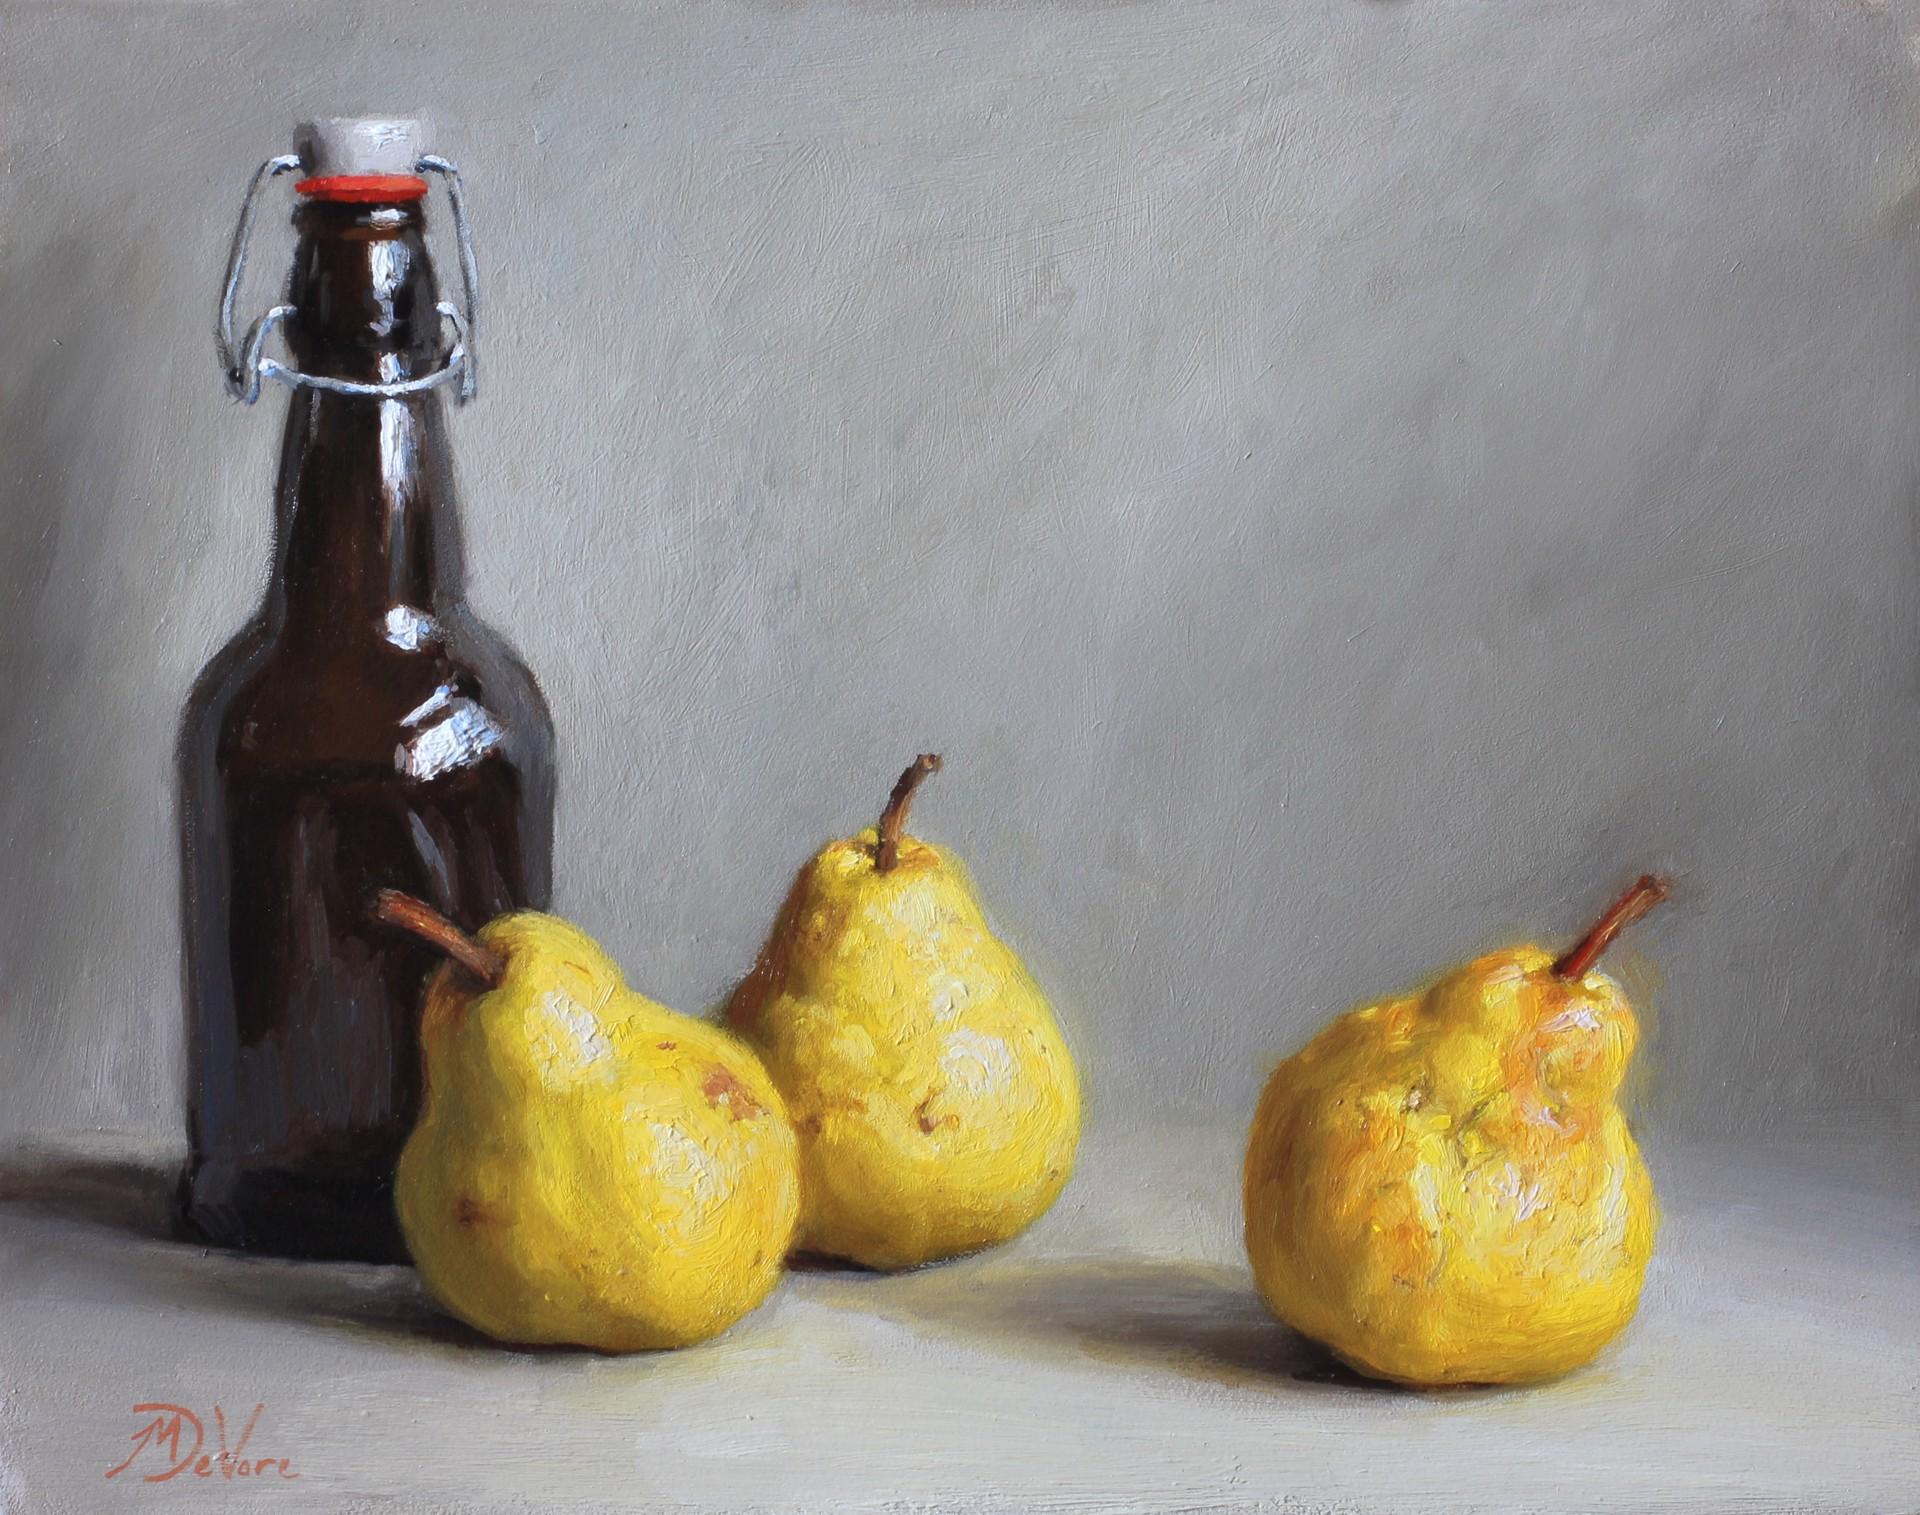 Pear Cider - Art by Michael DeVore